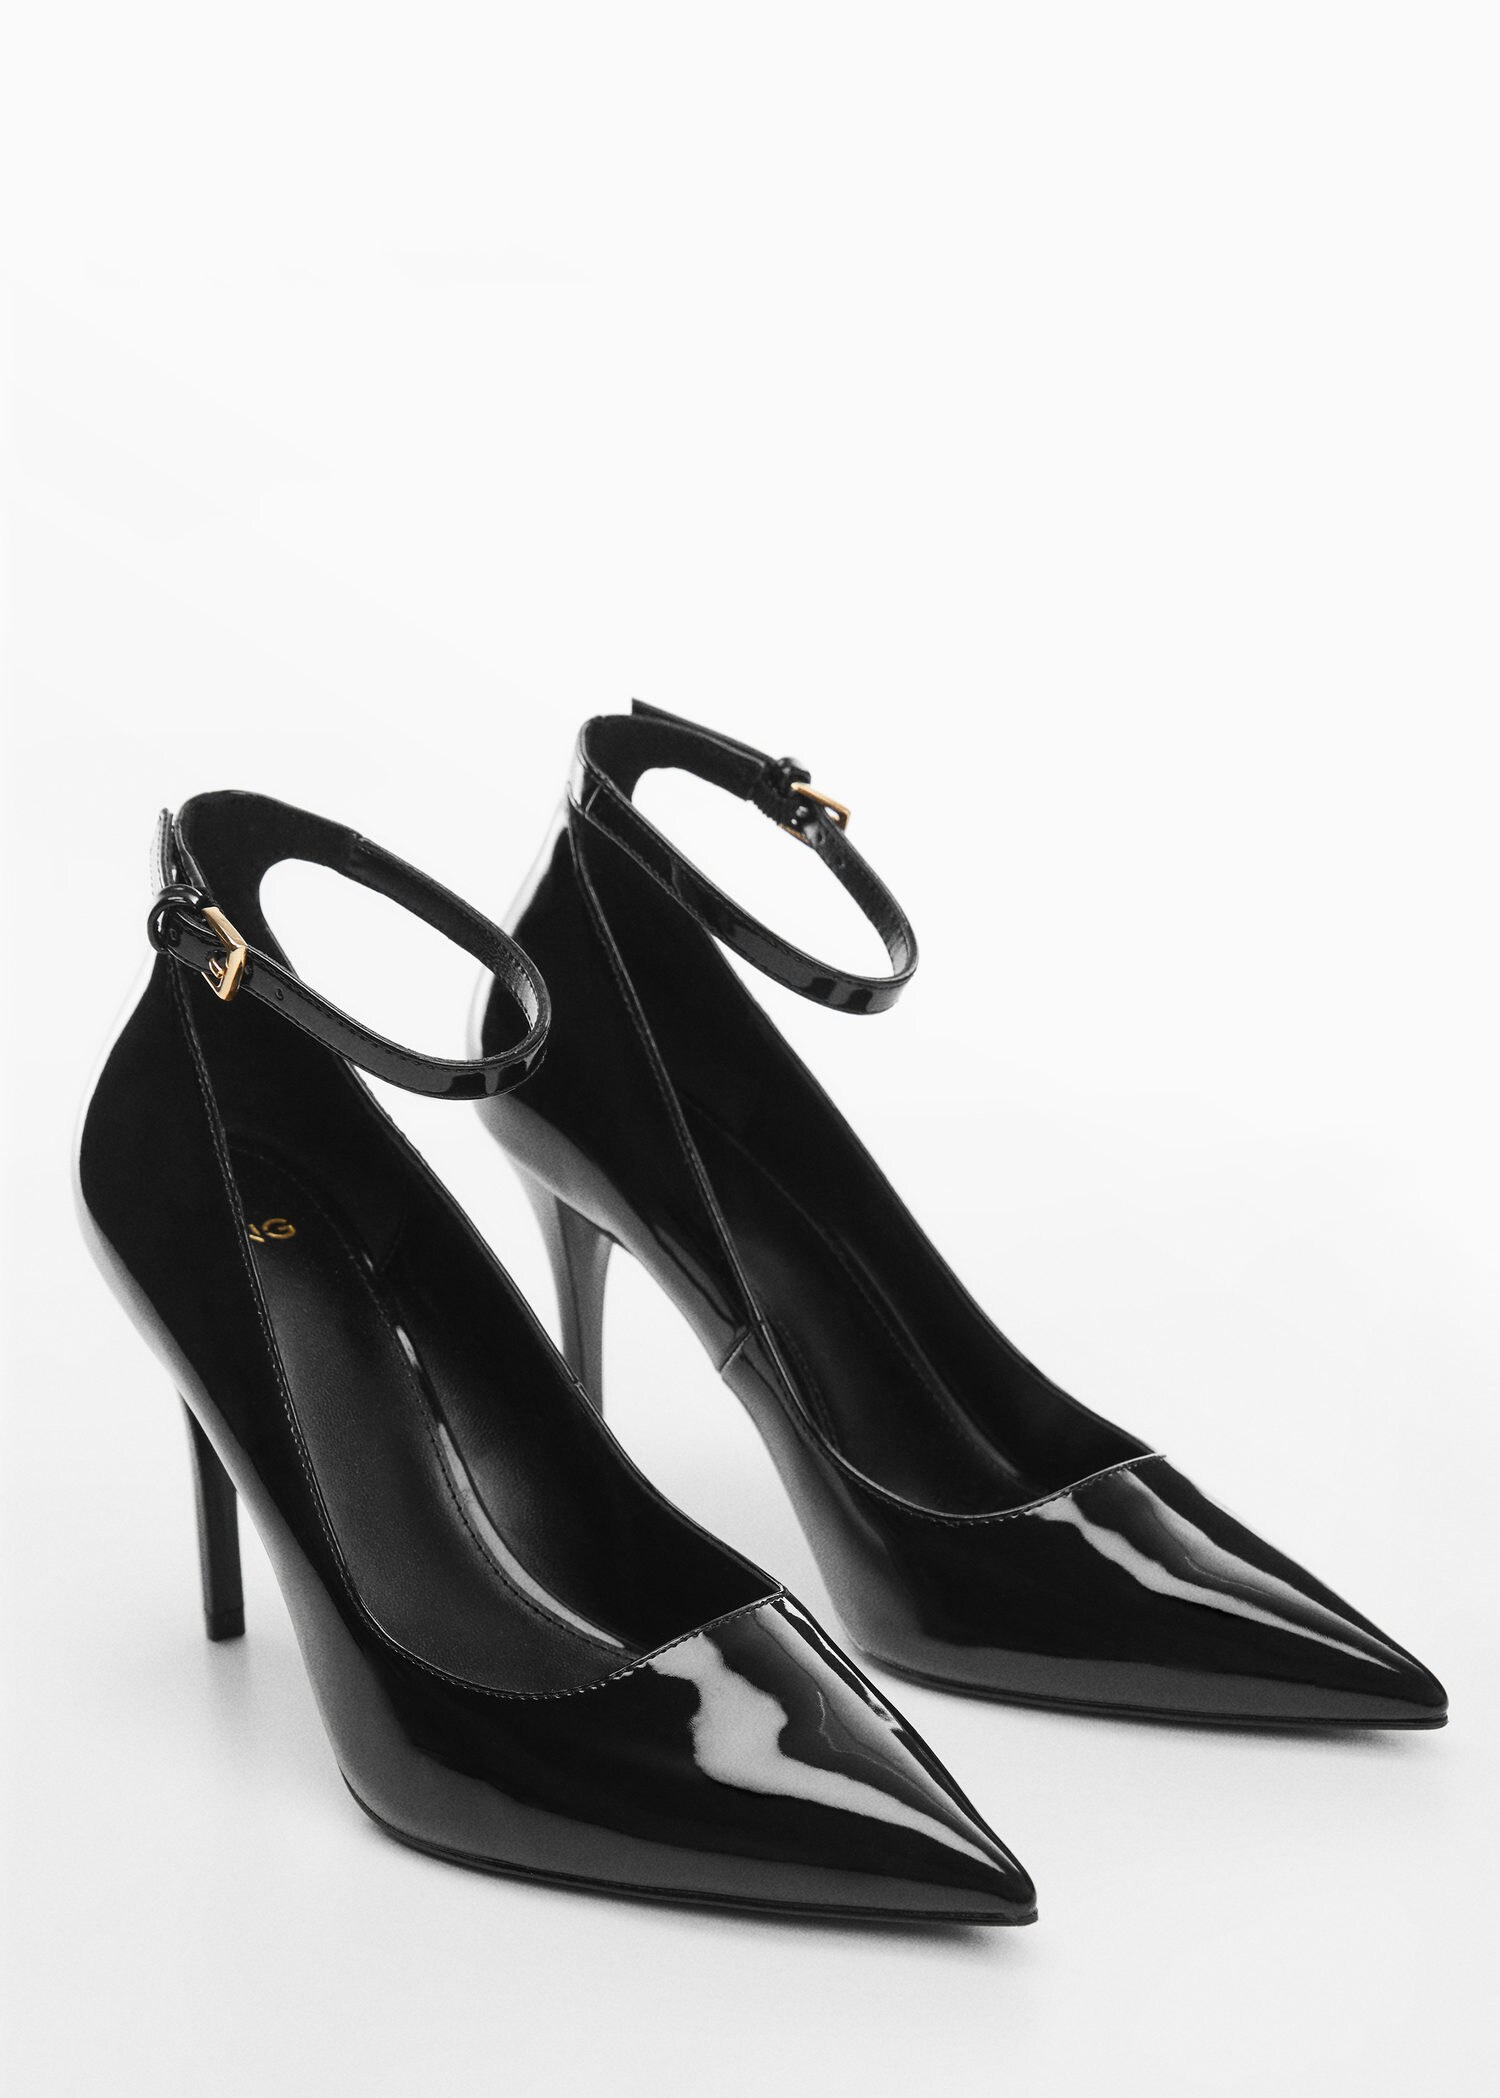 Christian Dior Women's Black Patent Leather Heels Shoes sz: 38 US 8 | eBay